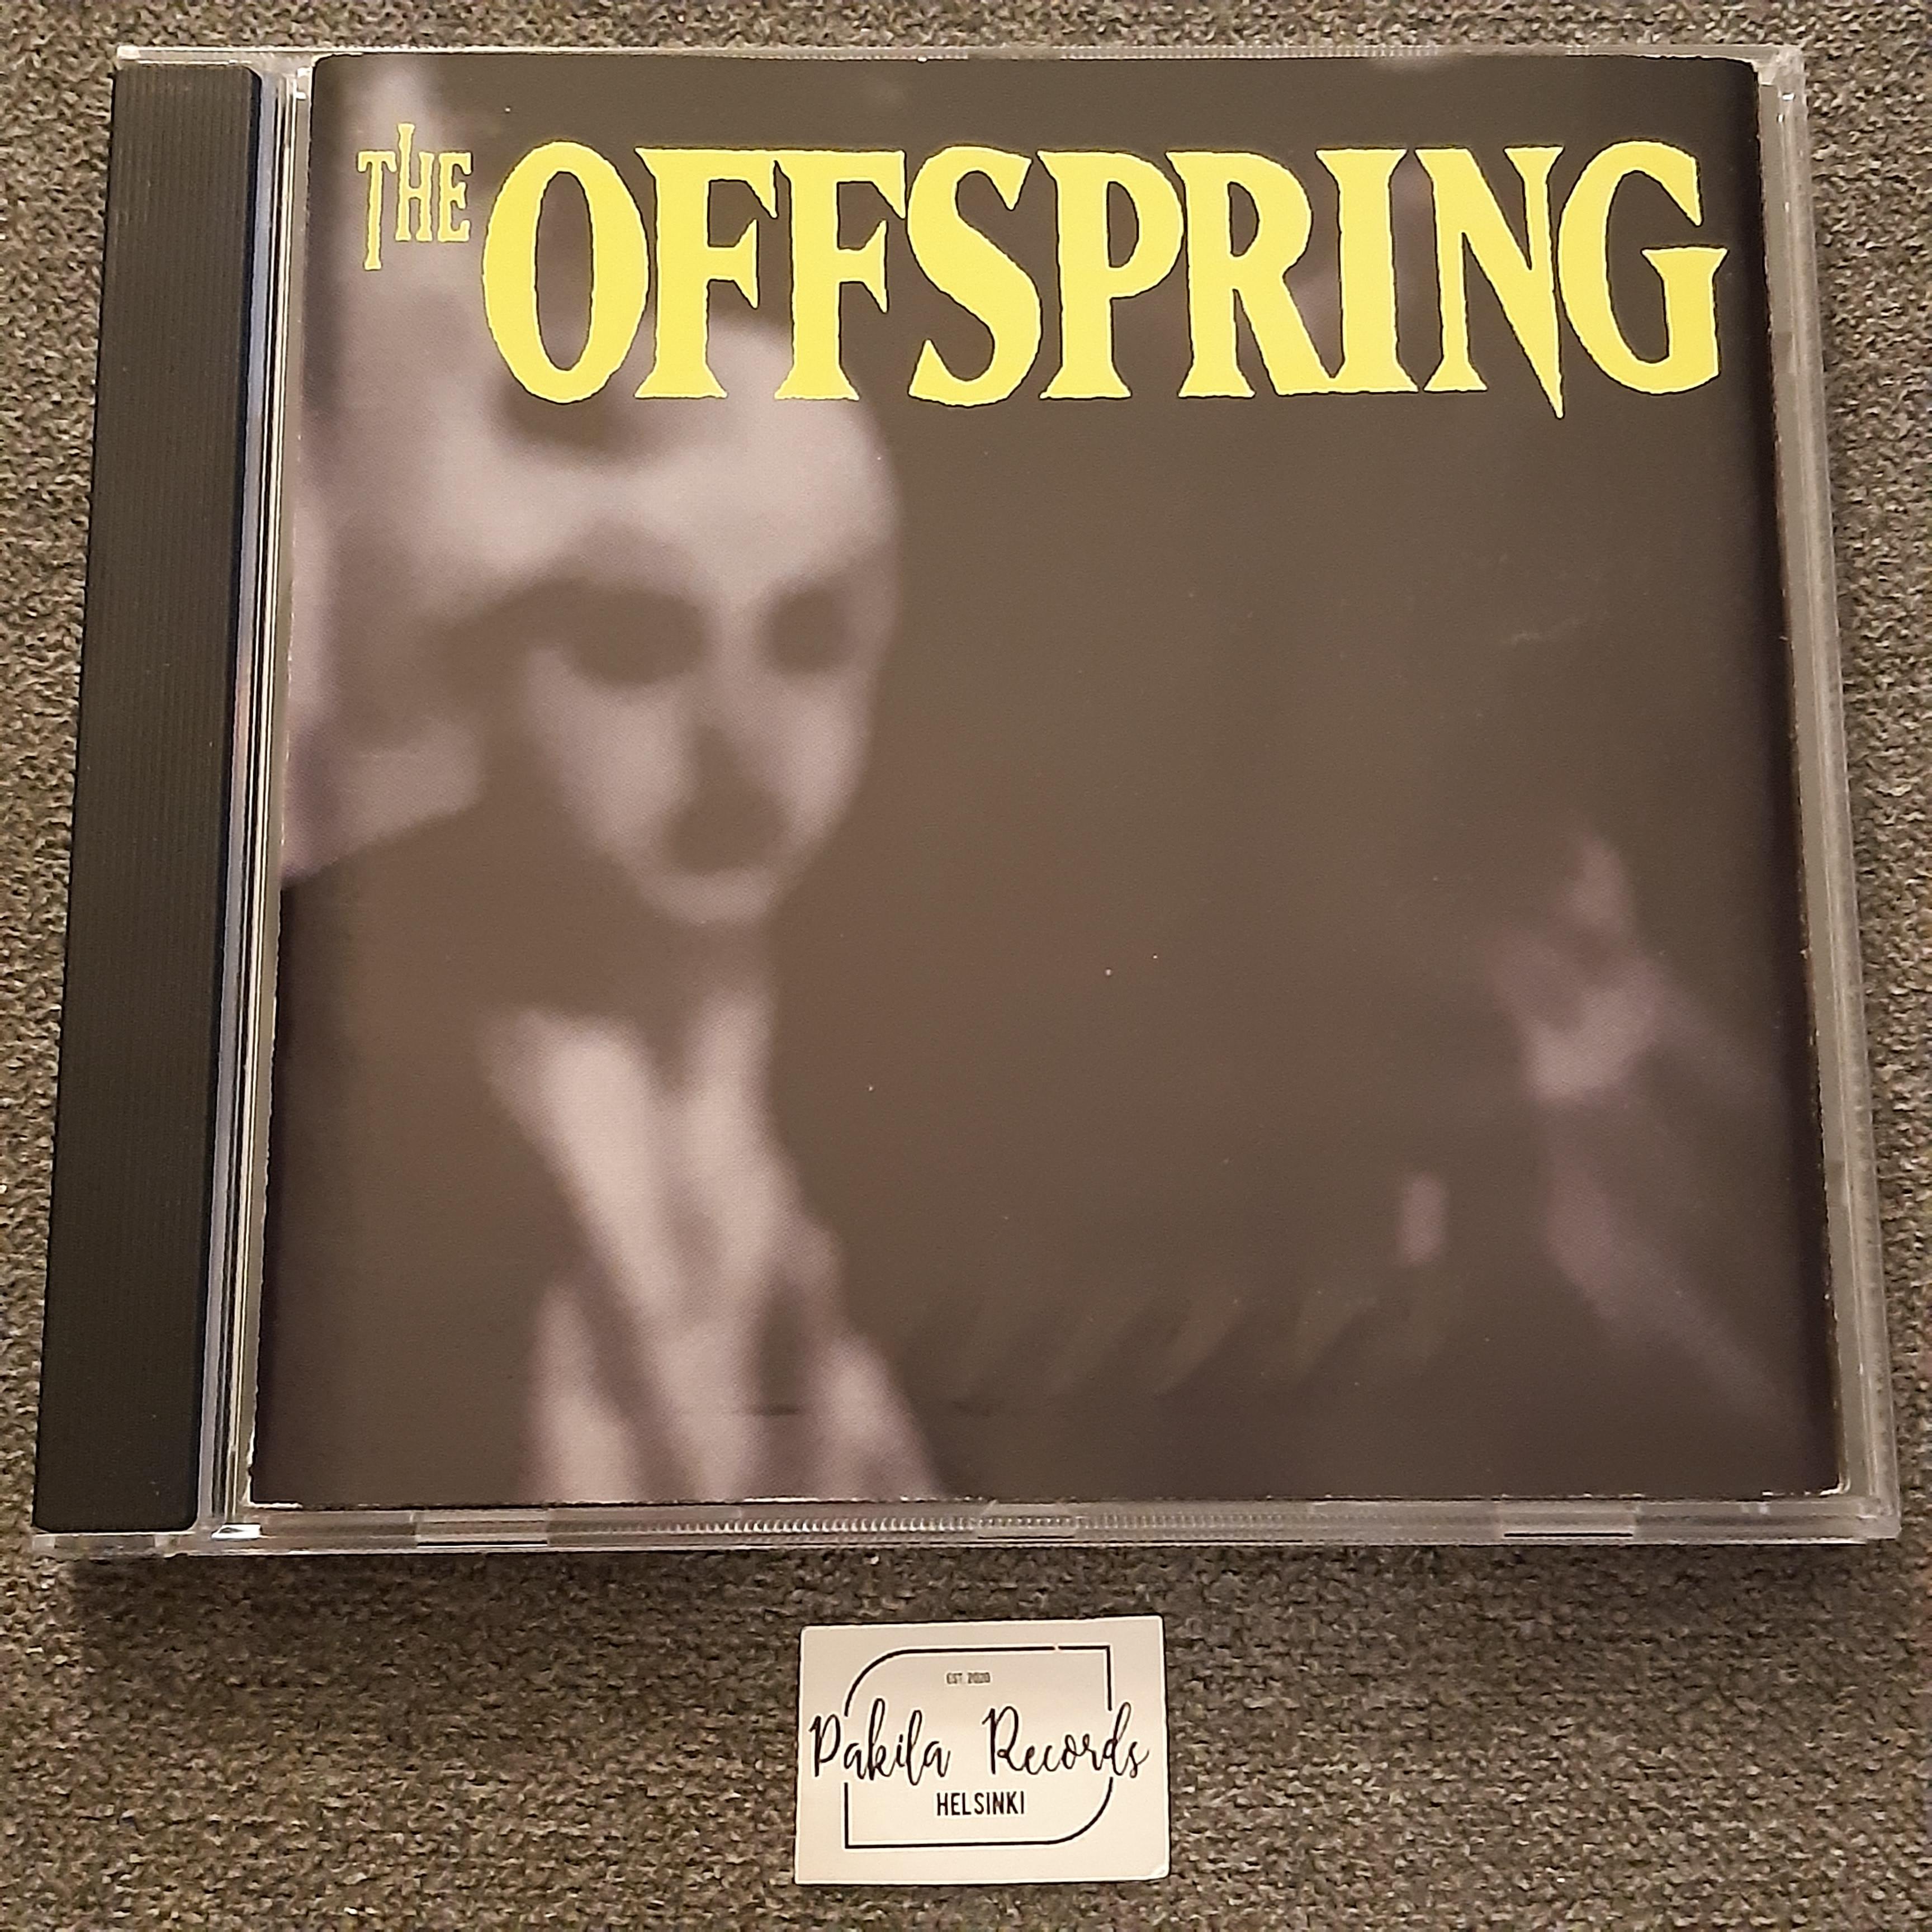 The Offspring - The Offspring - CD (käytetty)